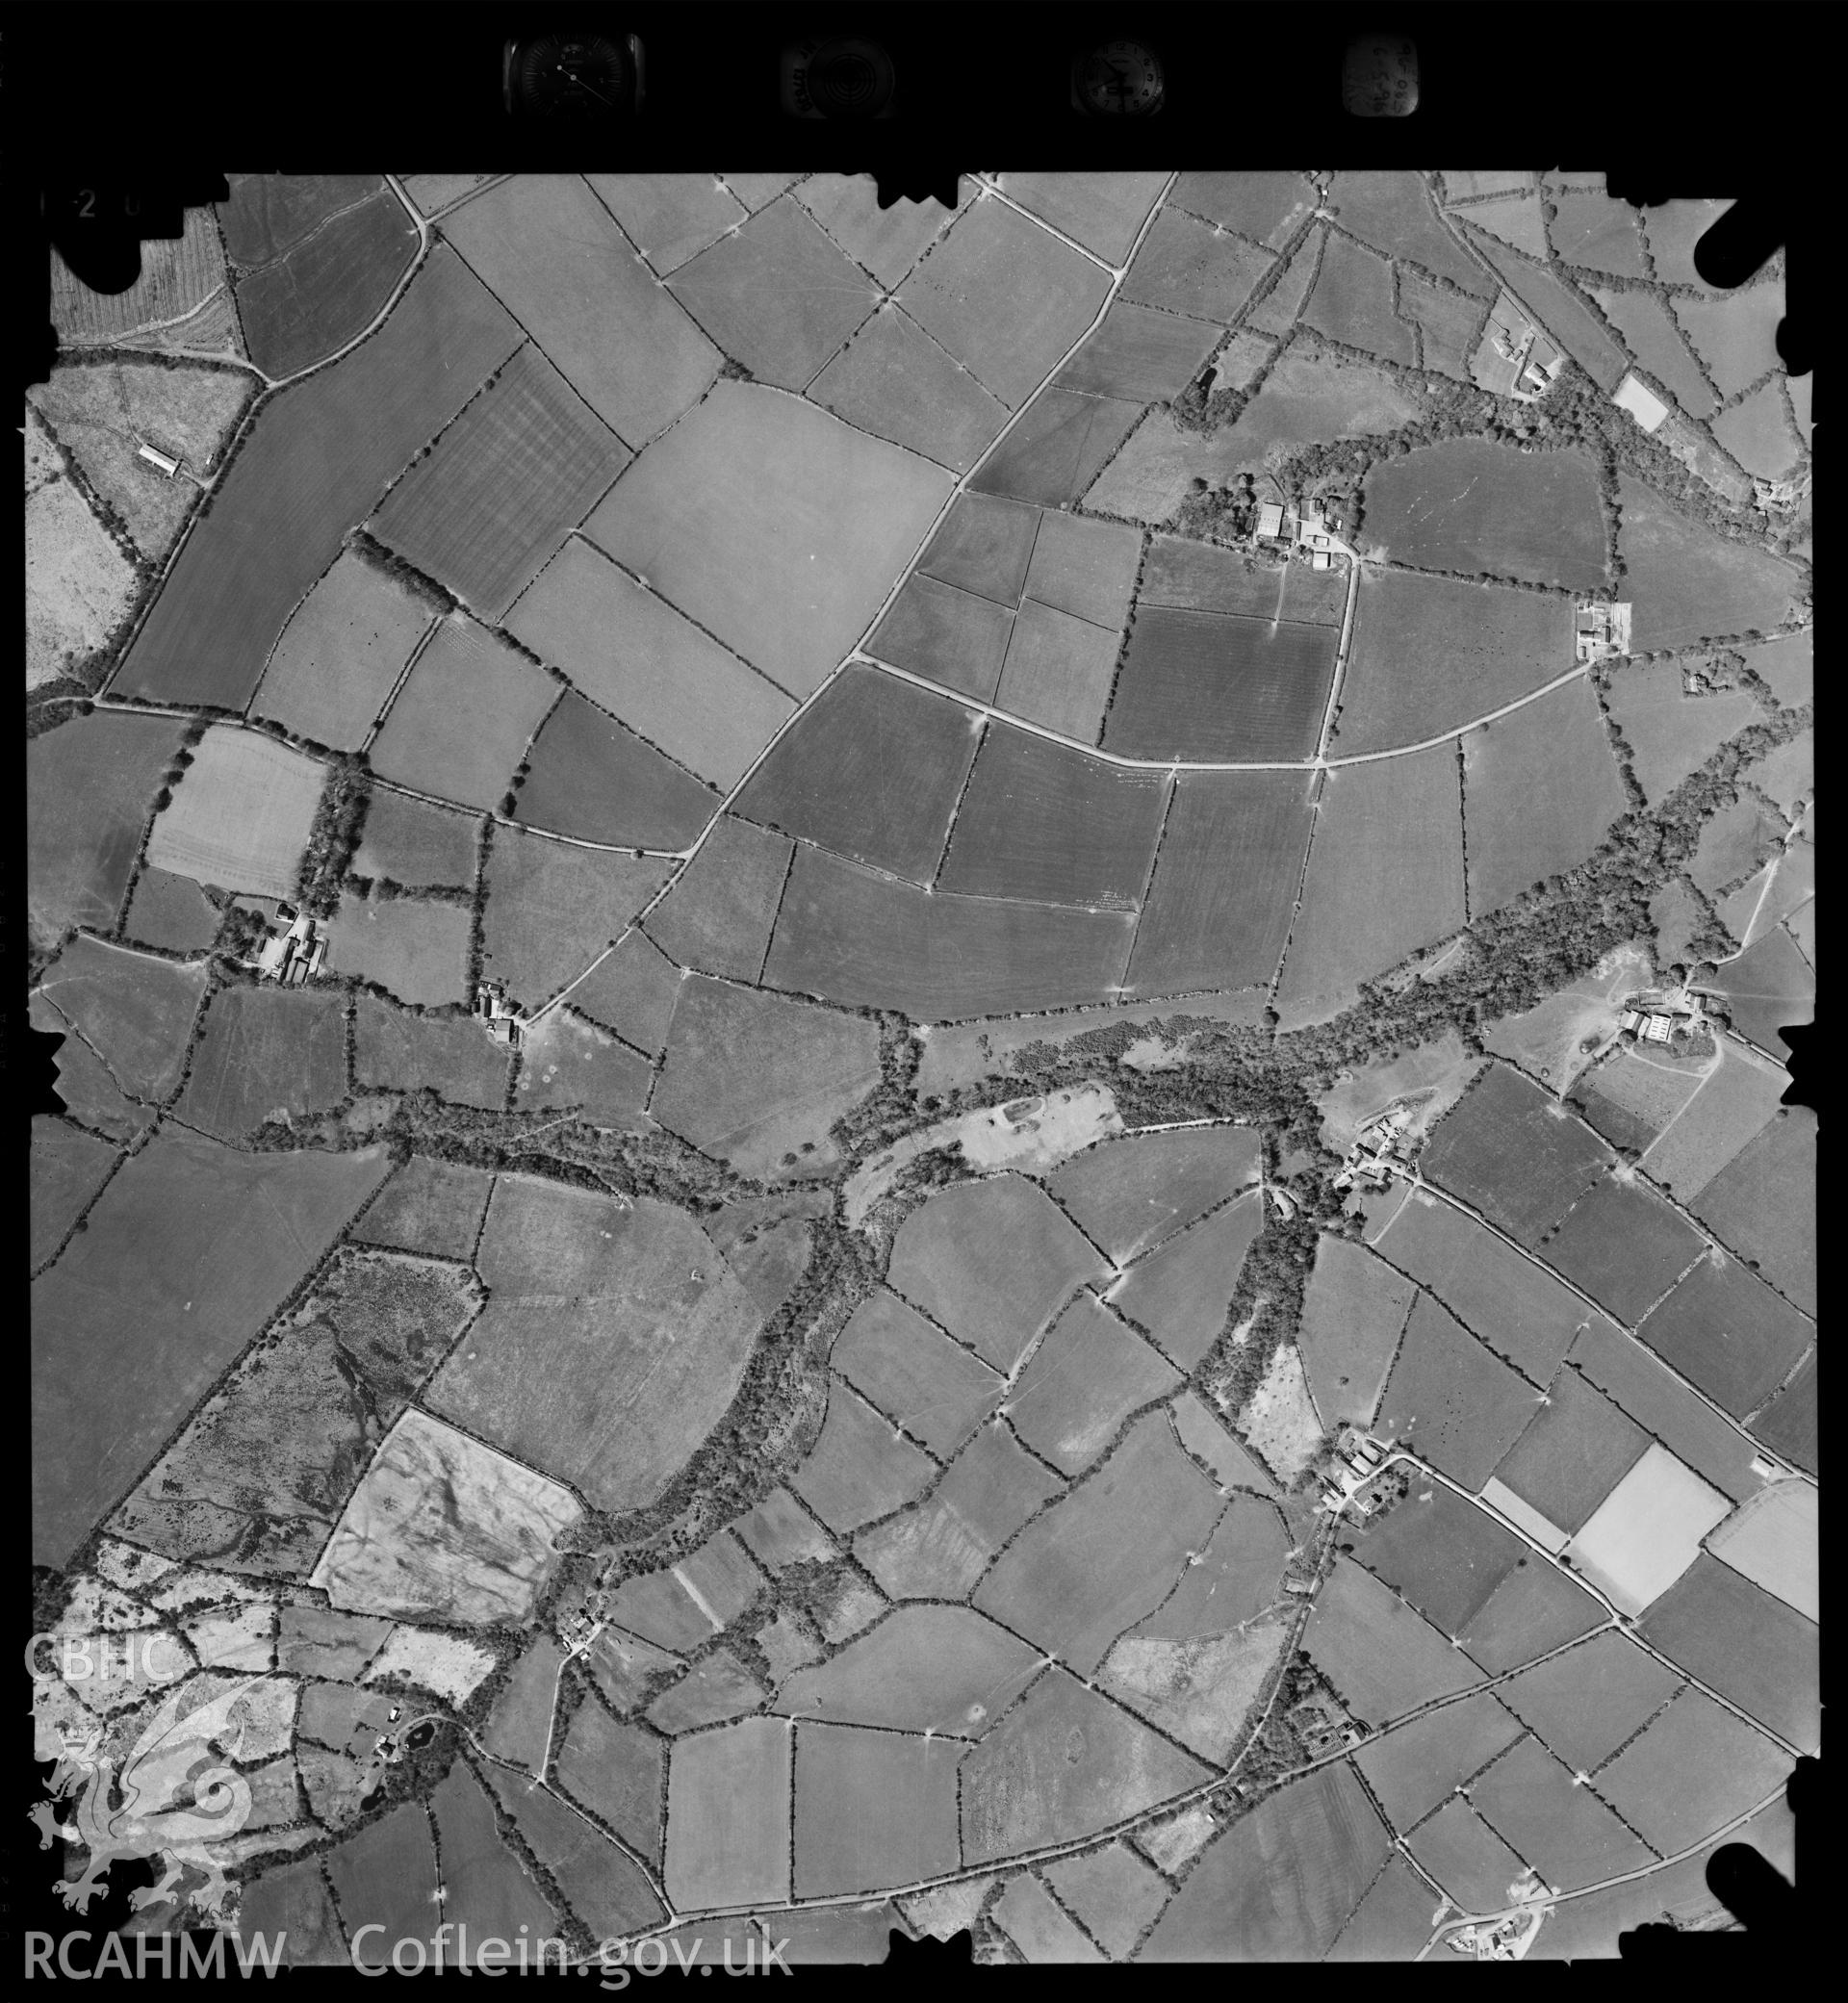 Digital copy of an aerial photograph showing the Llandysul area SN375548, taken by Ordnance Survey, 1996